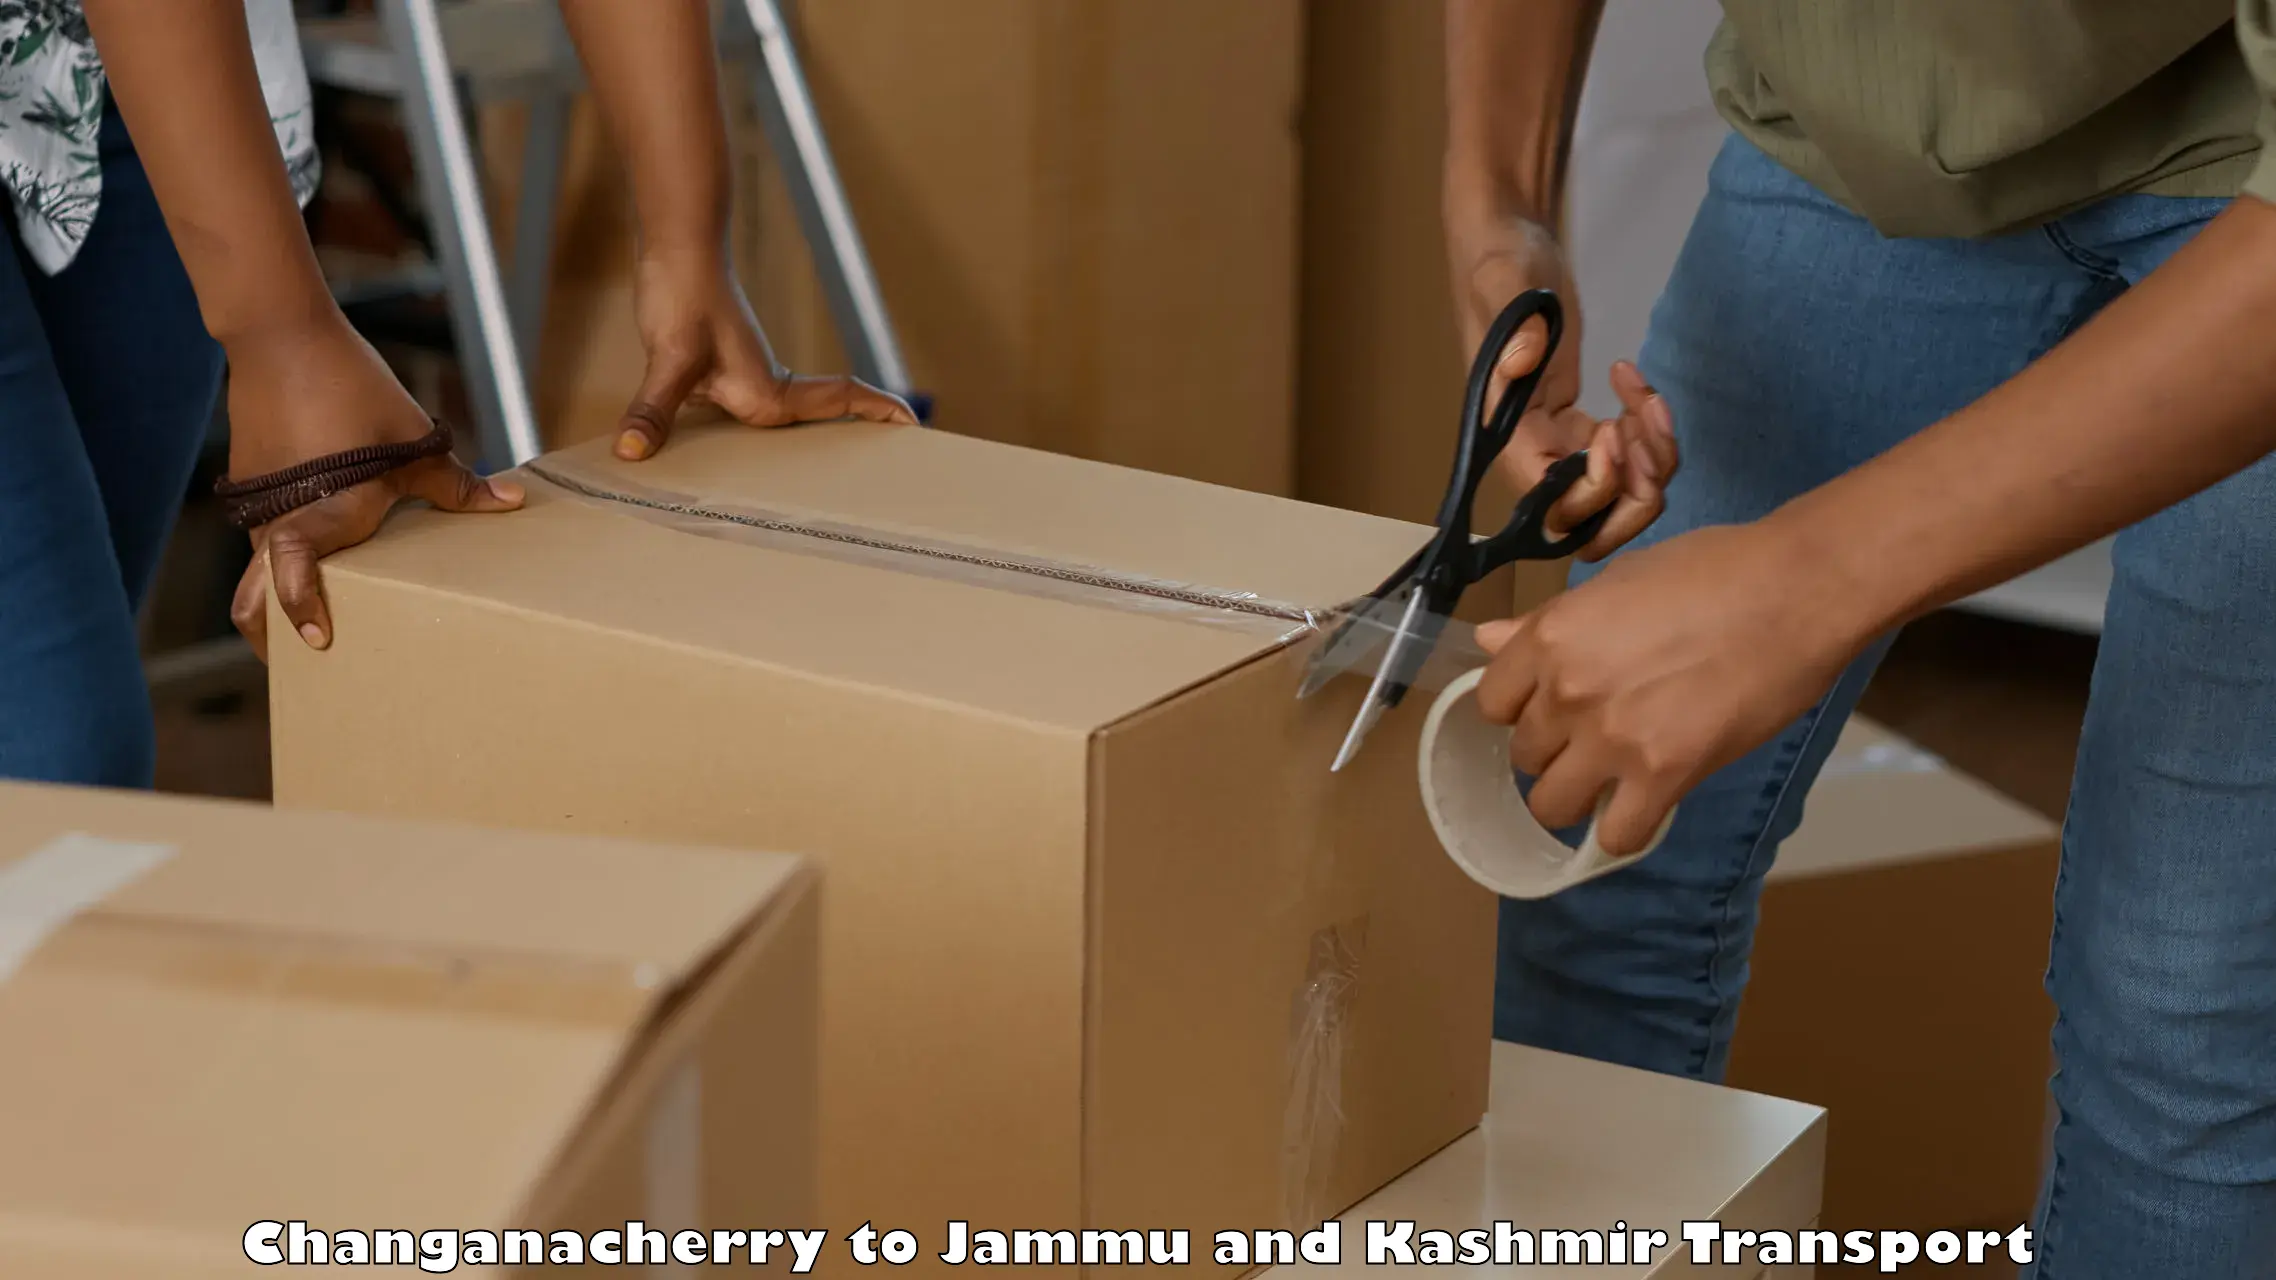 Truck transport companies in India Changanacherry to Srinagar Kashmir